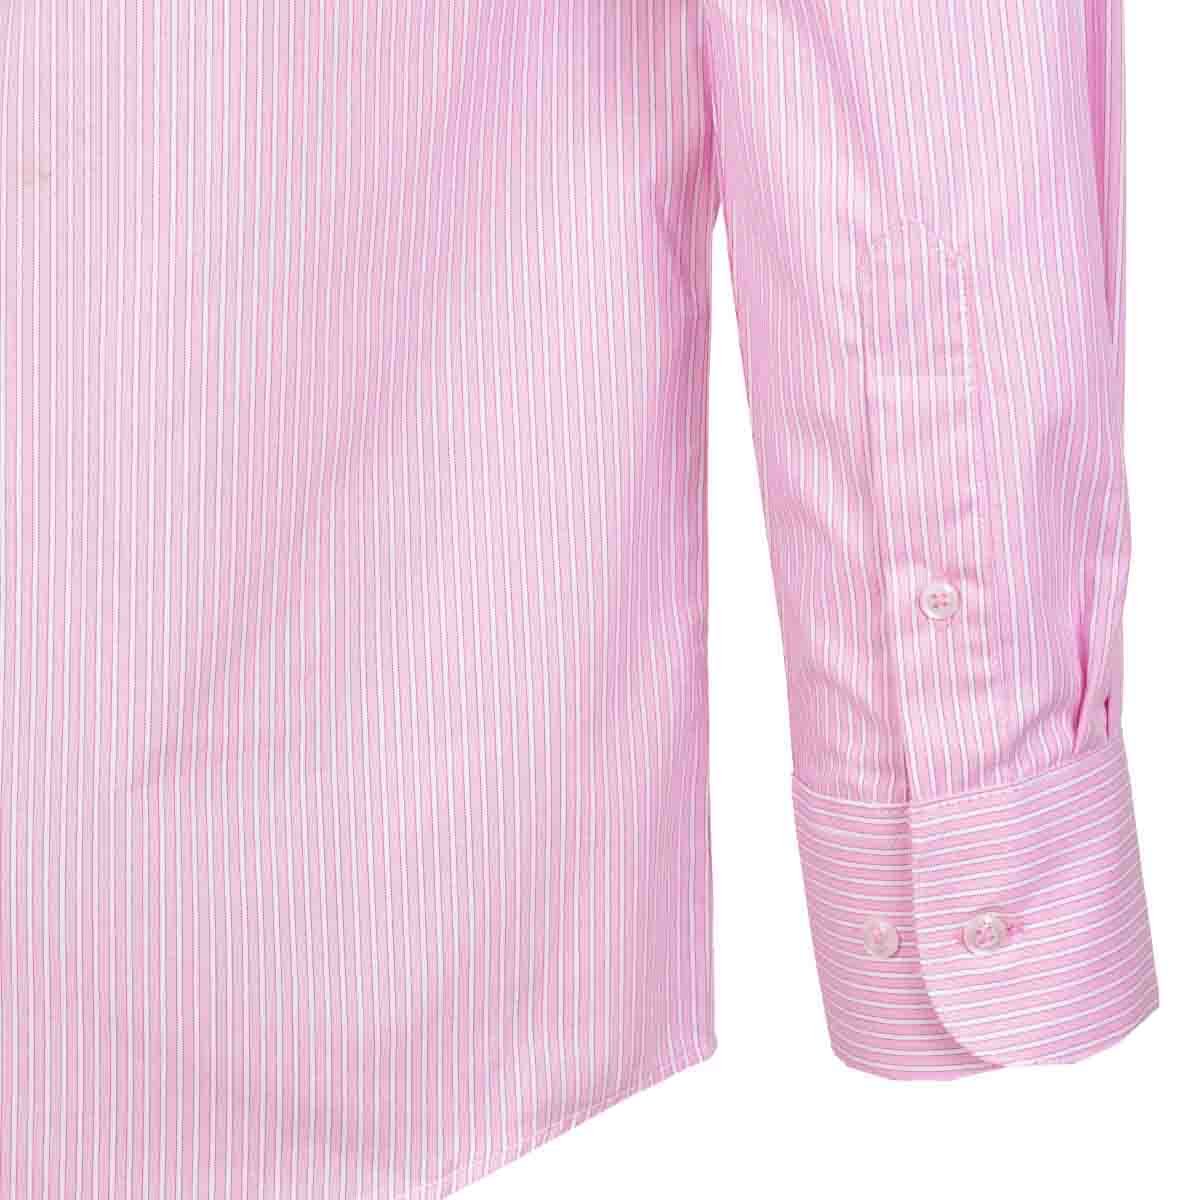 Camisa de Vestir Regular  Rosa Combinado Nina Ricci para Caballero